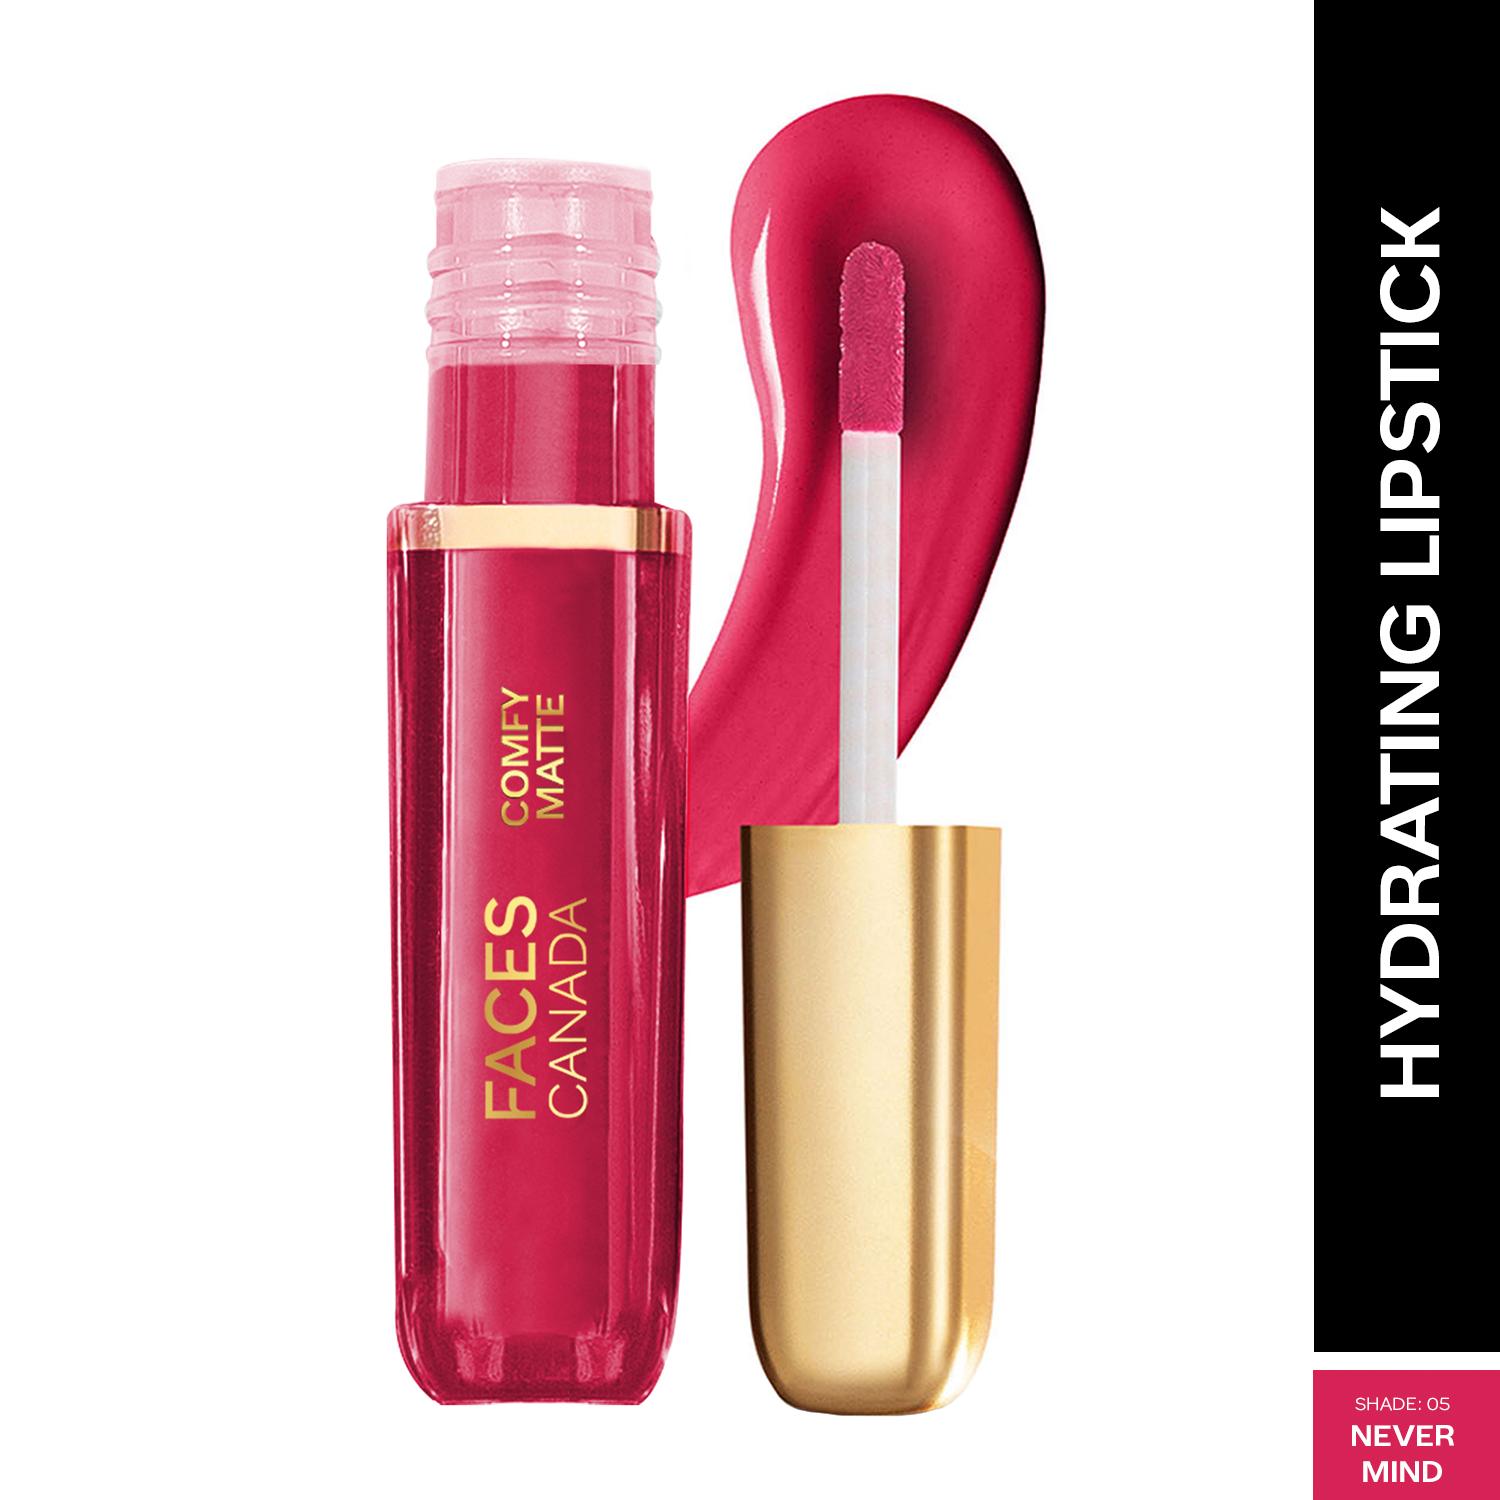 Faces Canada | Faces Canada Comfy Matte Liquid Lipstick, 10HR Stay, No Dryness - Never Mind 05 (3 ml)